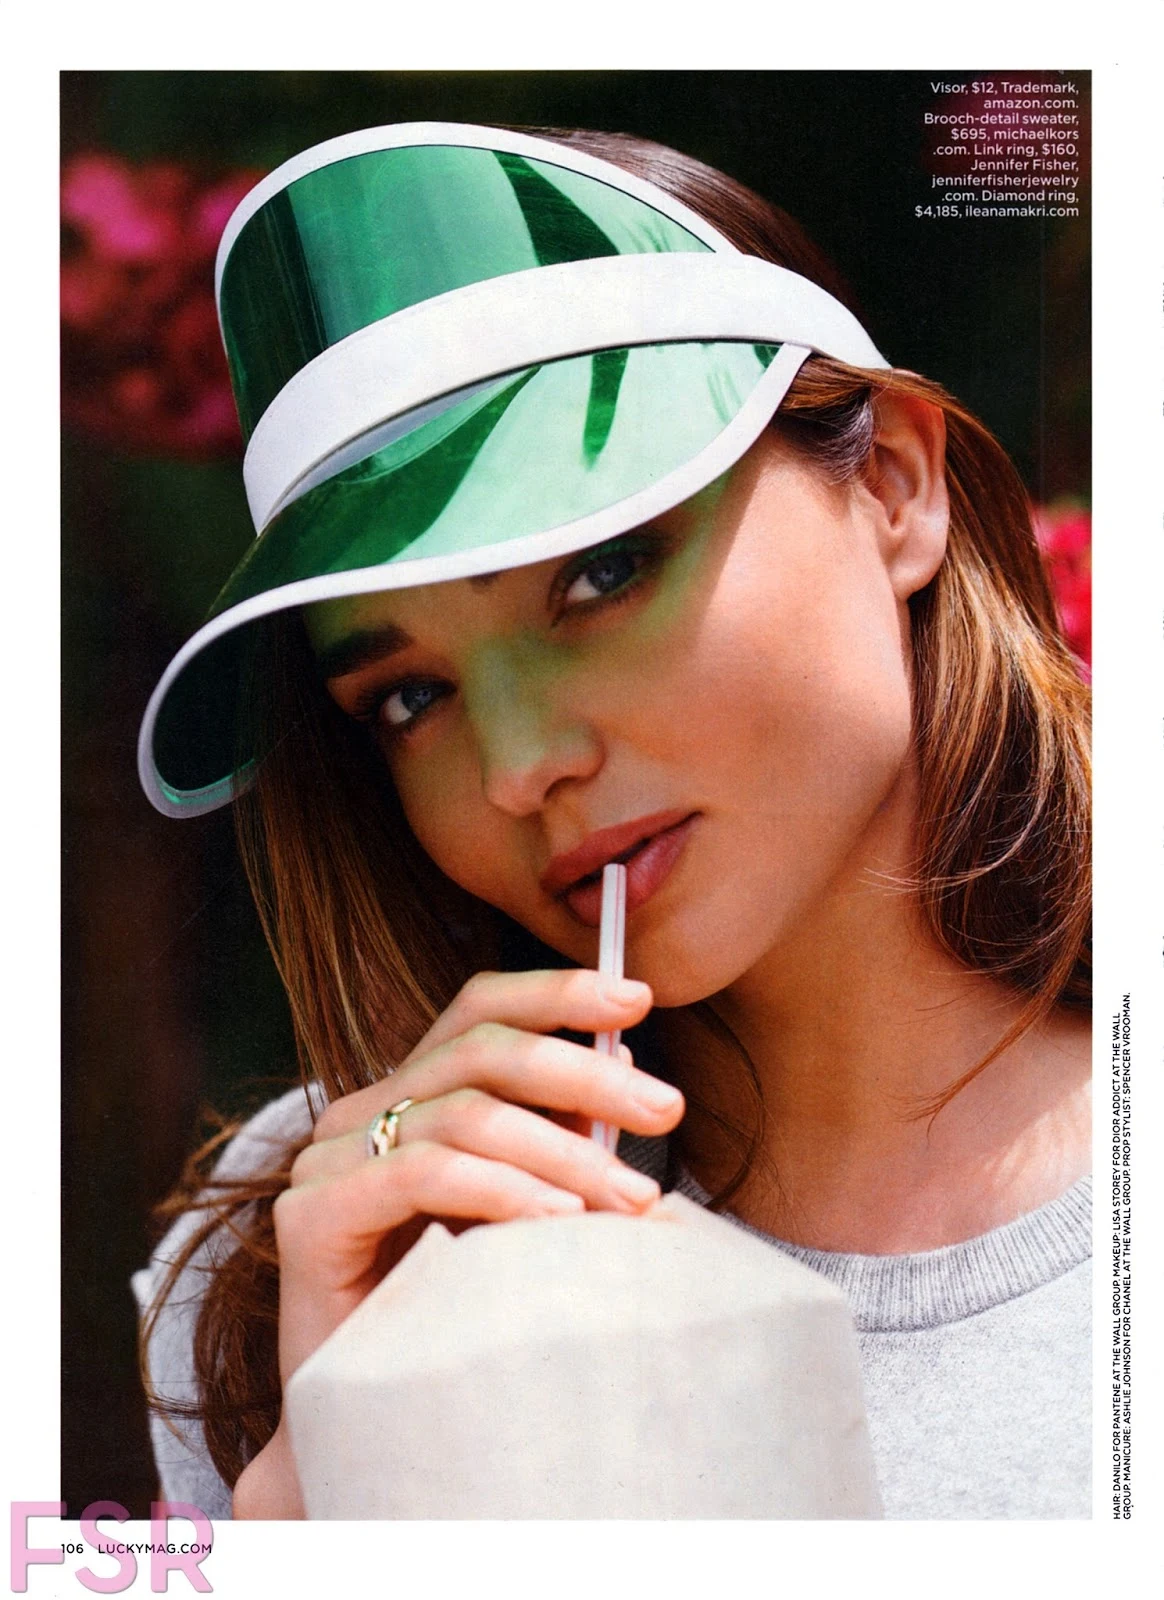 Miranda Kerr in a summery fashion shoot for Lucky Magazine June/July 2014